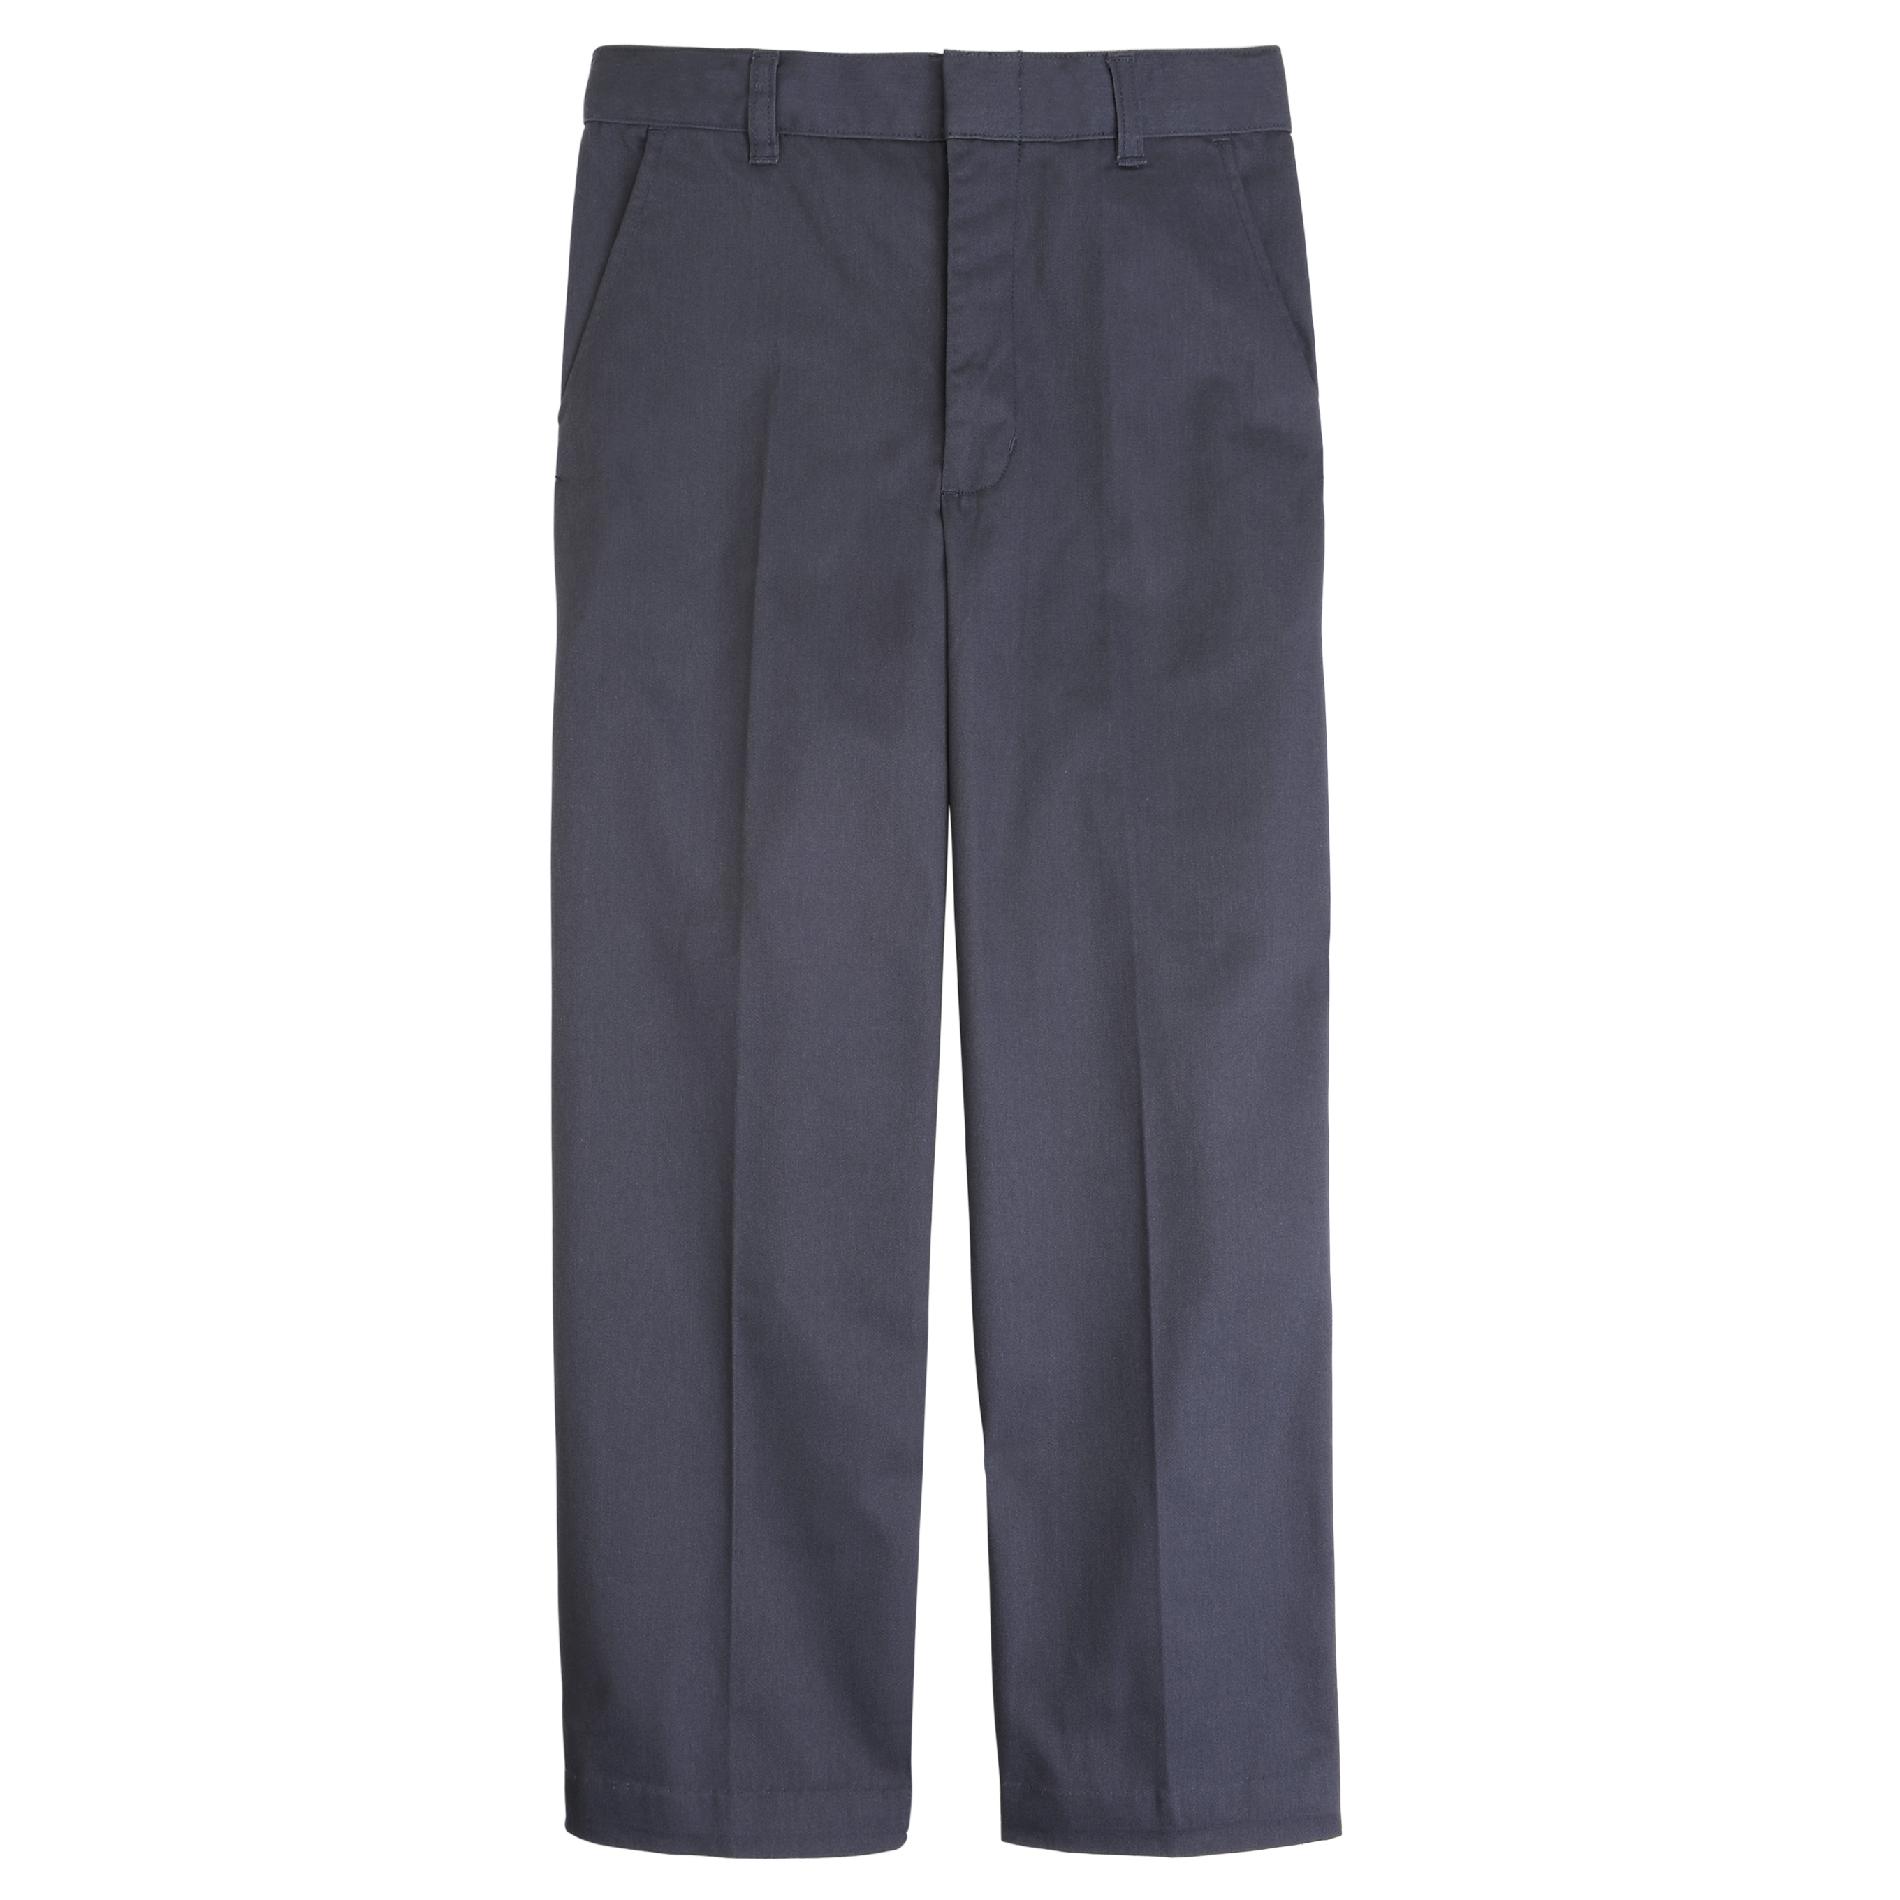 Boys 4-20 Adjustable Waist Double-Knee Pant (Modern Fit) Gray